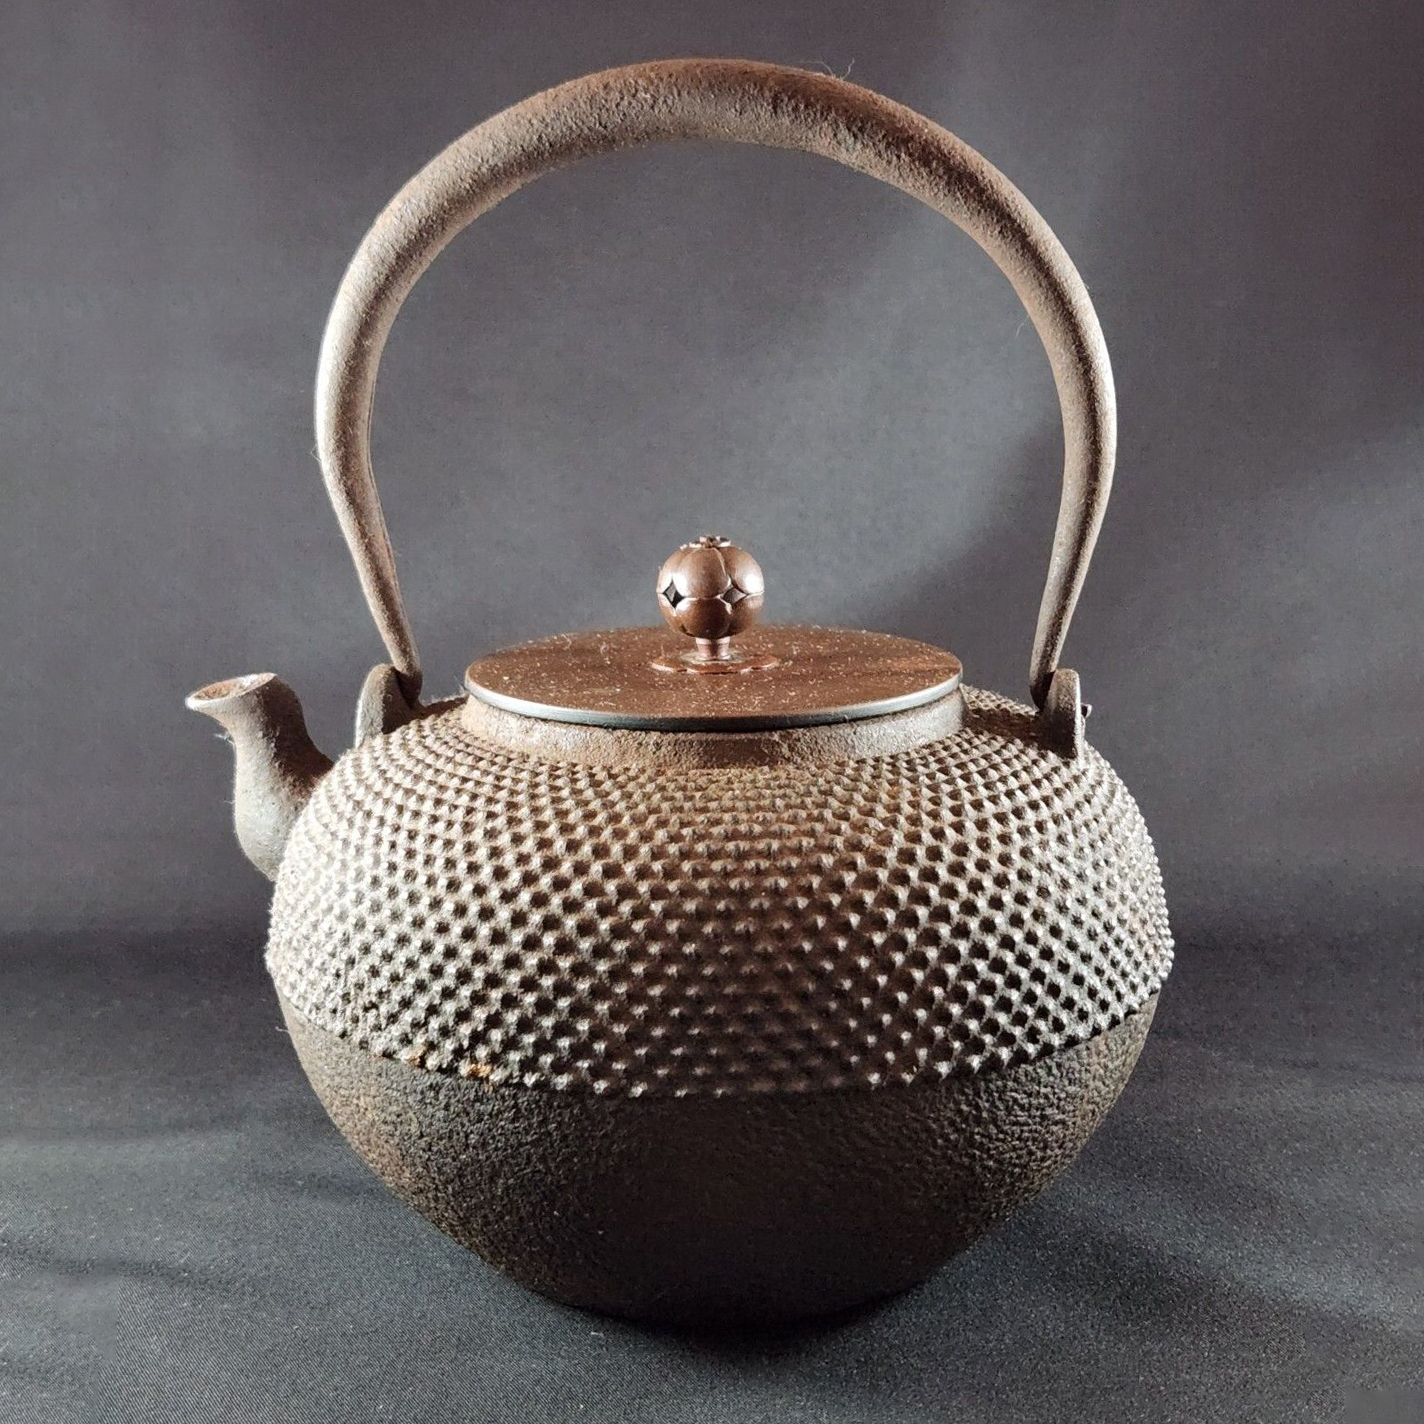 old cast iron tetsubin kettle from Japan